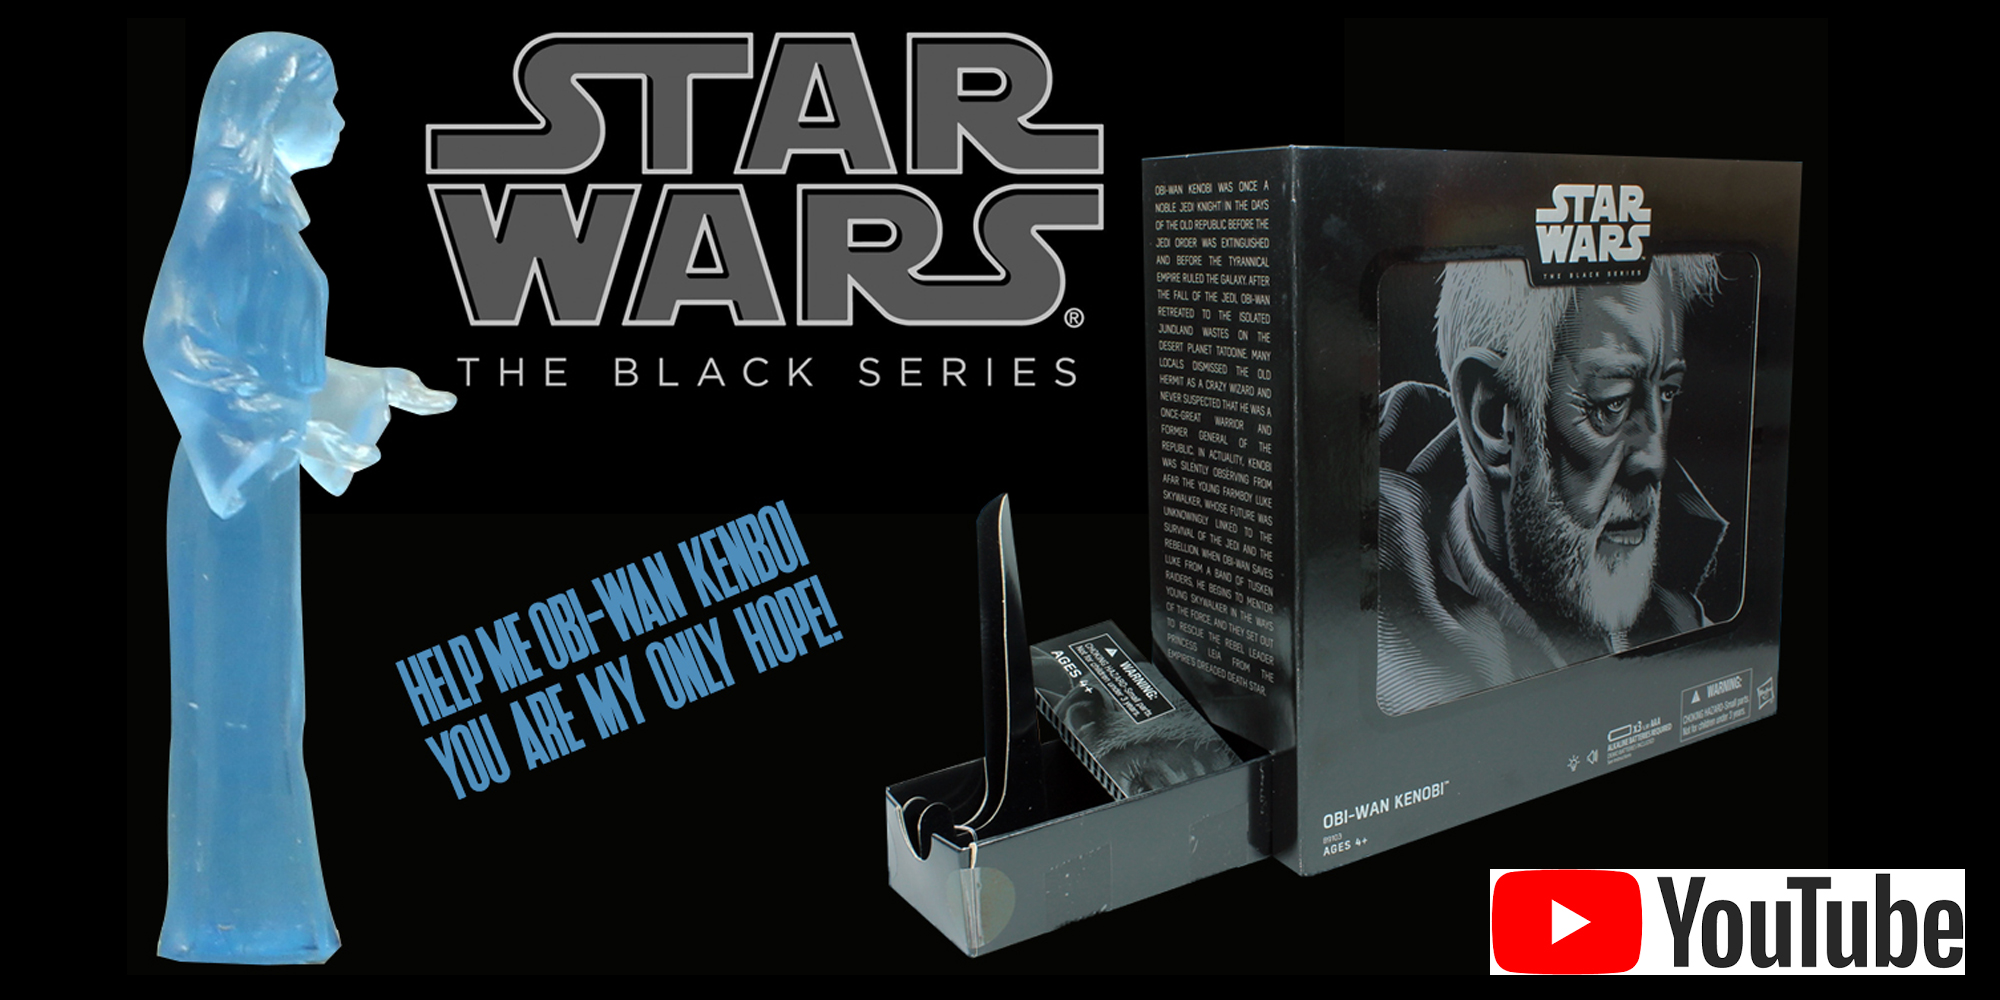 Star Wars The Black Series Obi-Wan Kenobi SDCC Video Review